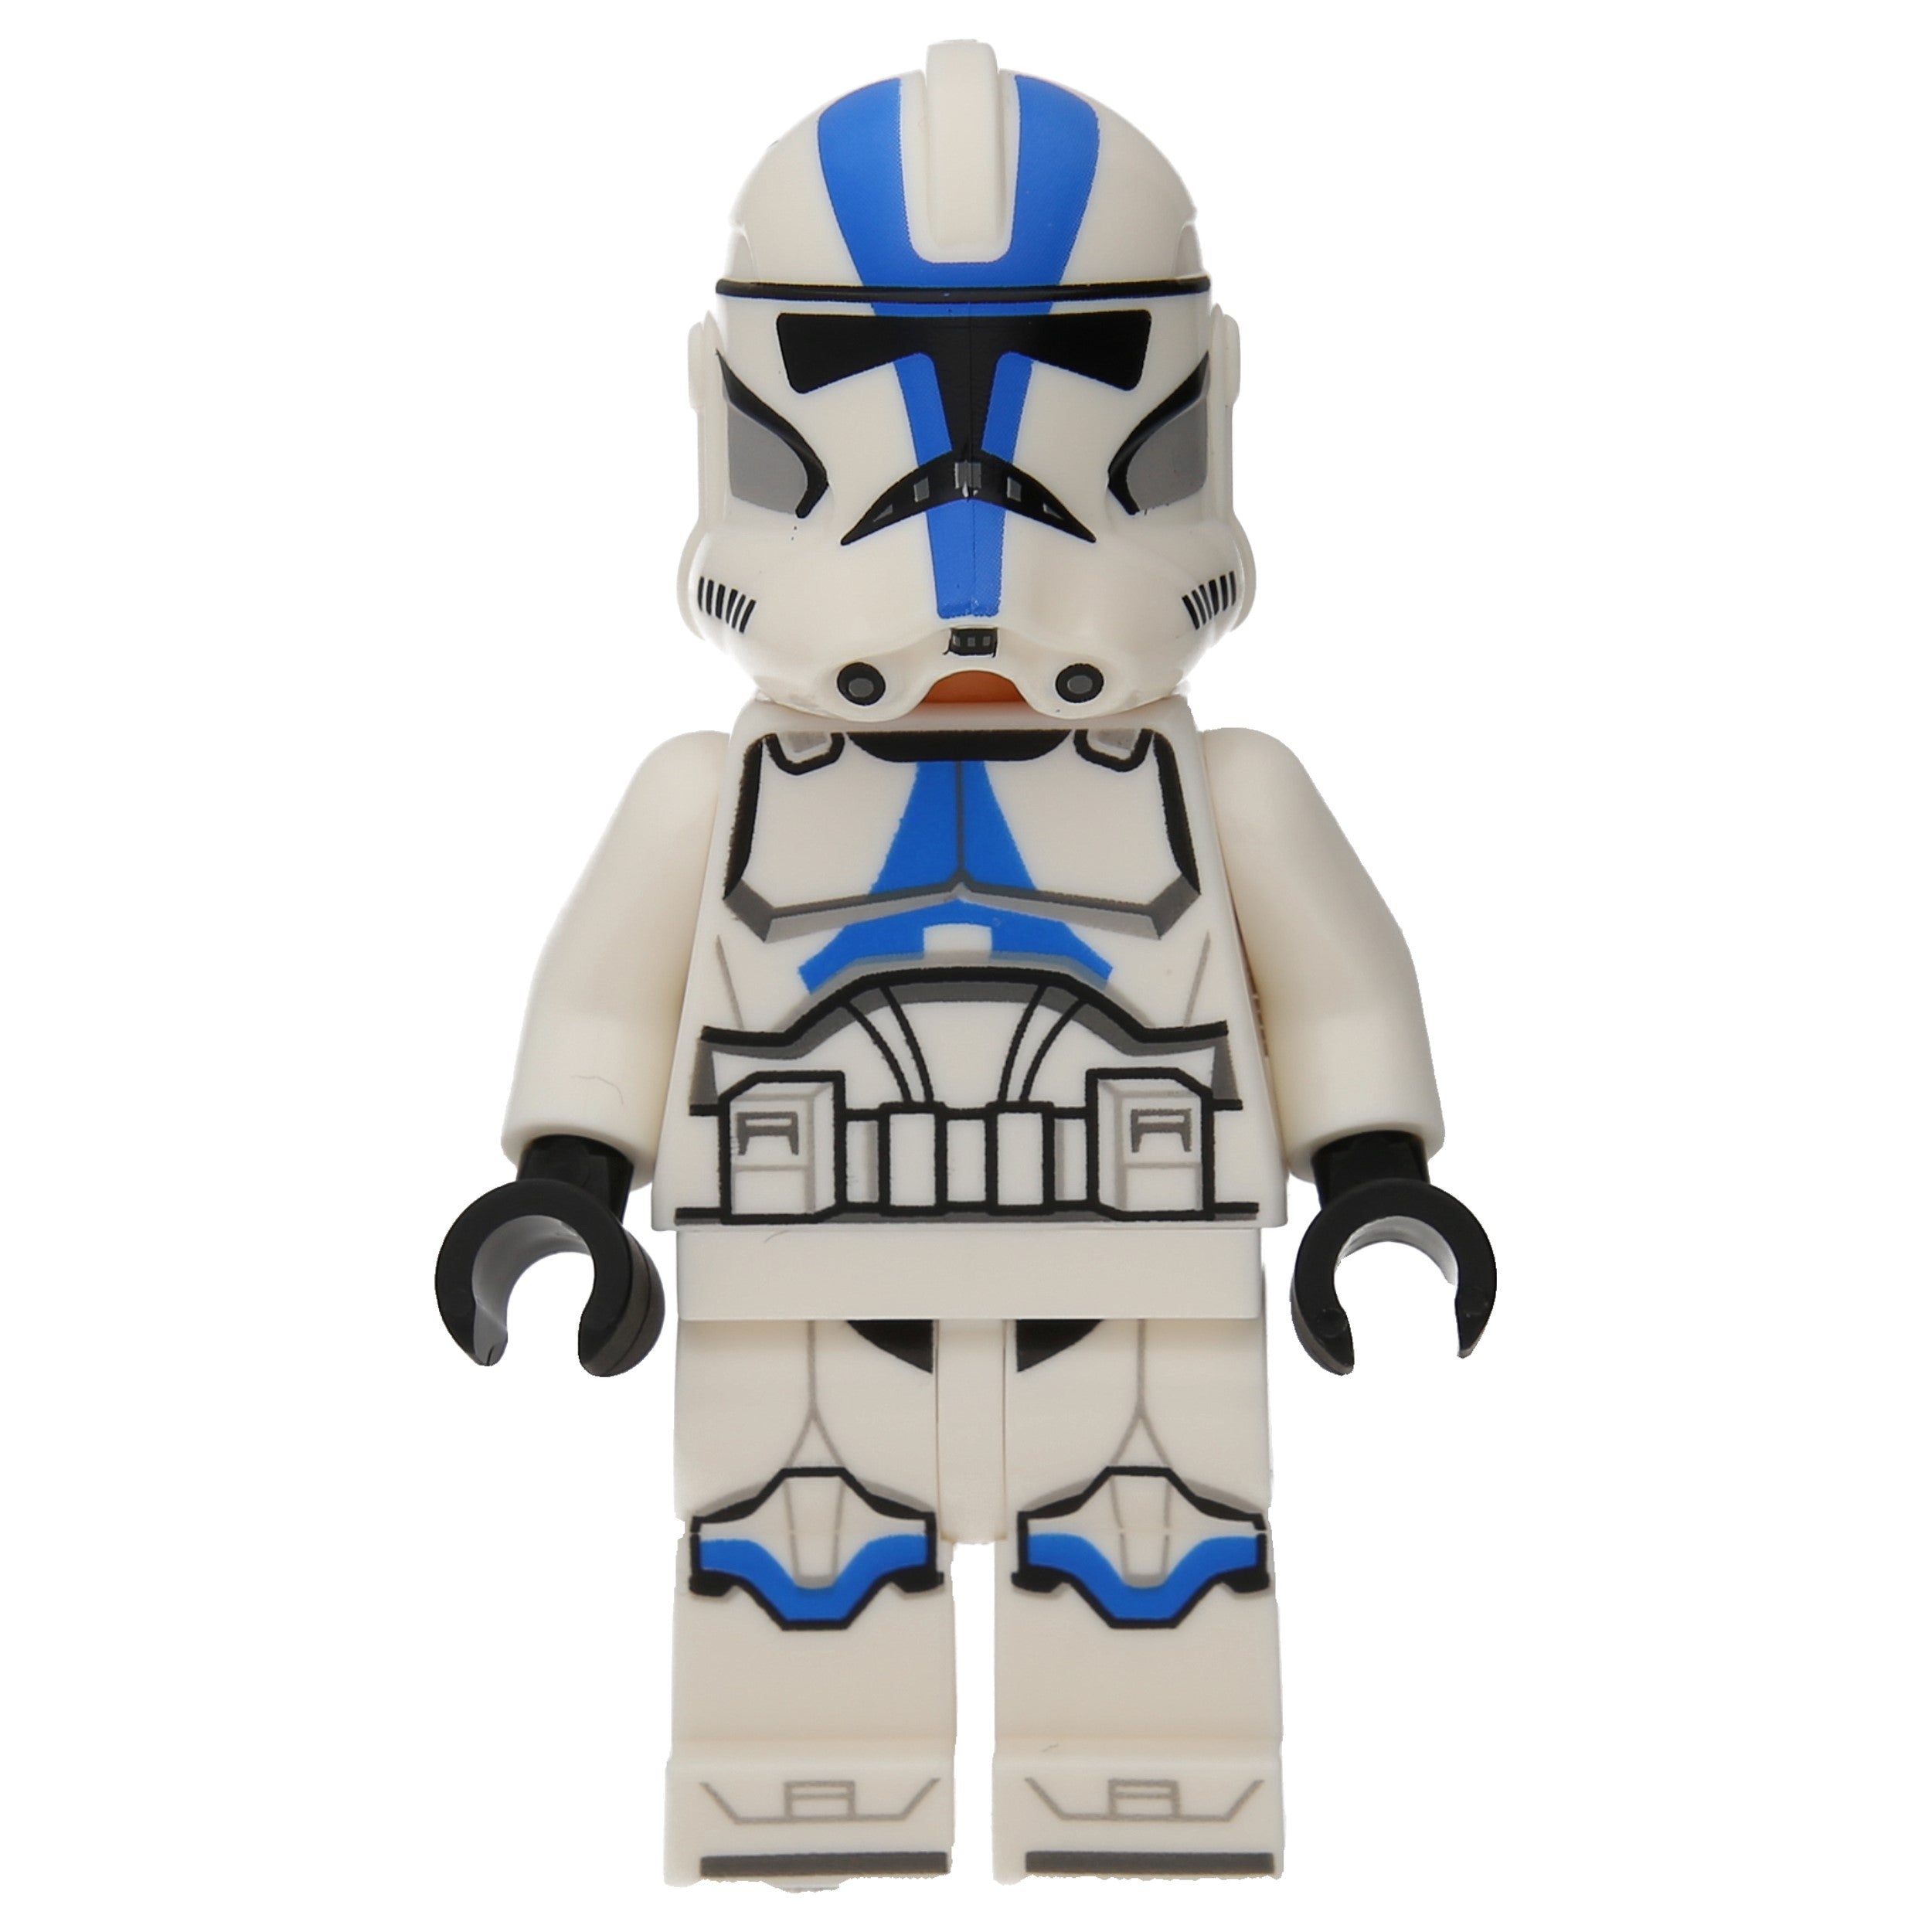 LEGO Star Wars Minifigure - Clone Warrior of the 501st Legion